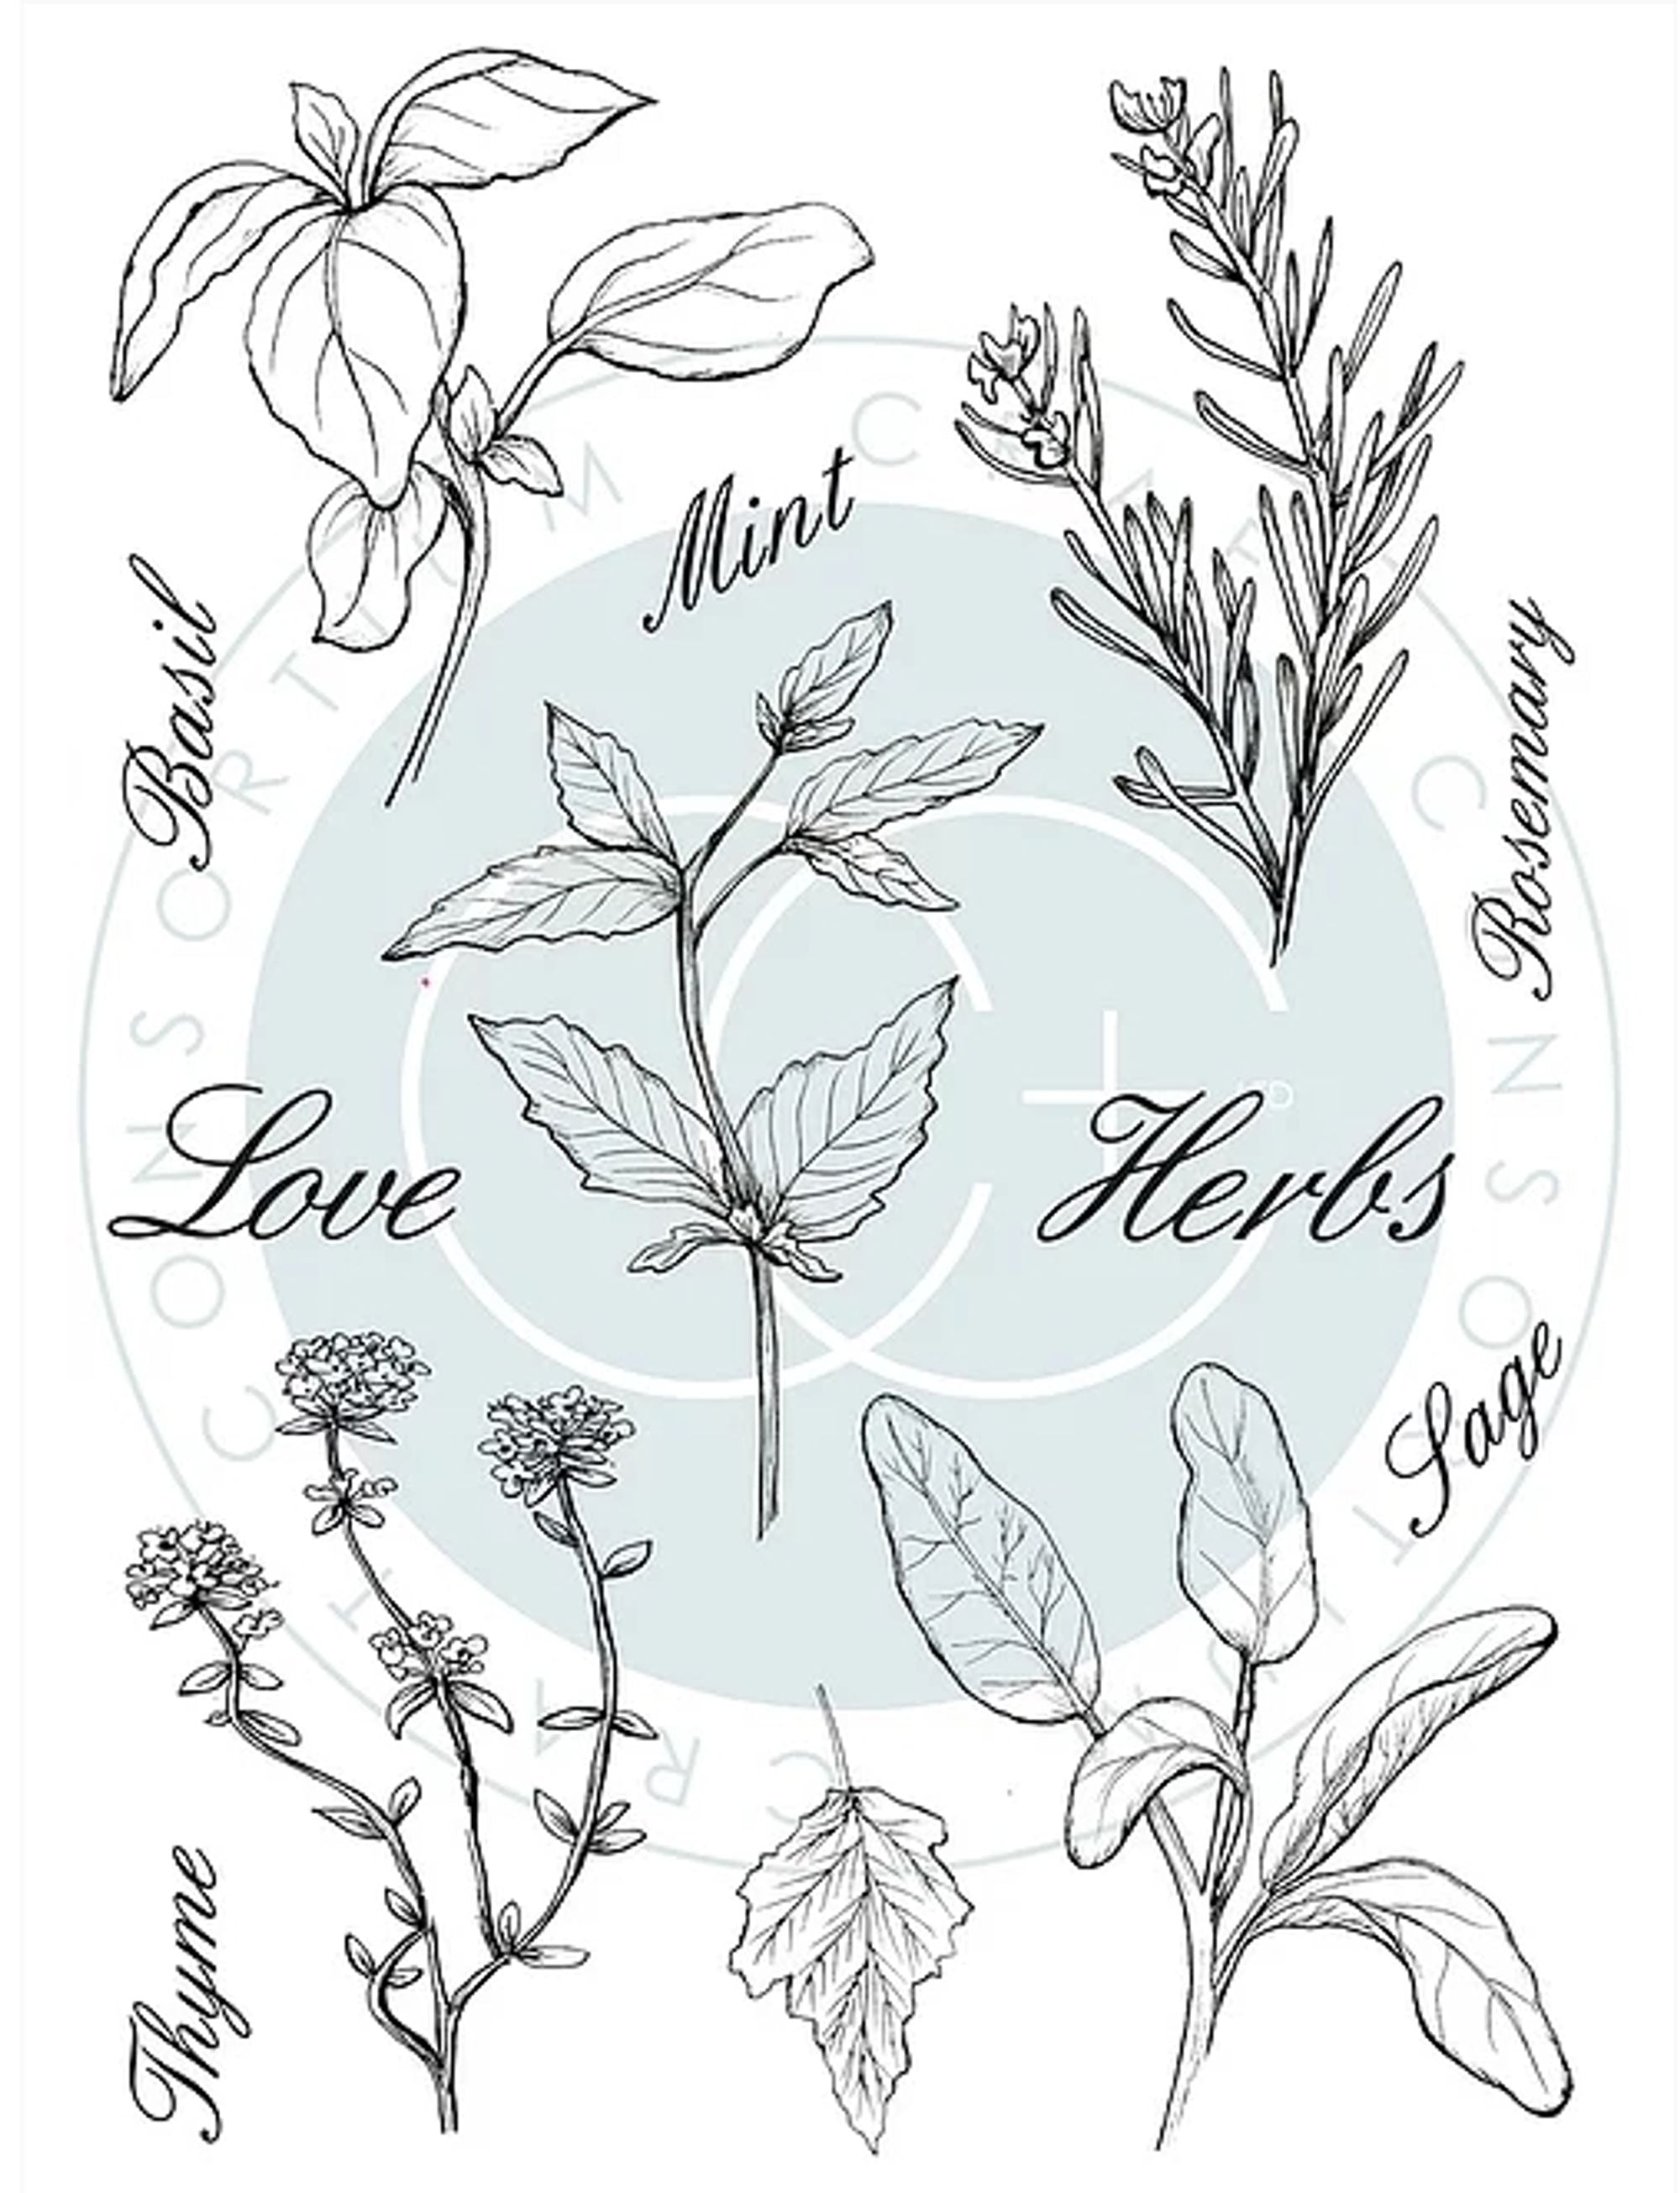 The Herbarium - Clear Stamp Set - Herbs